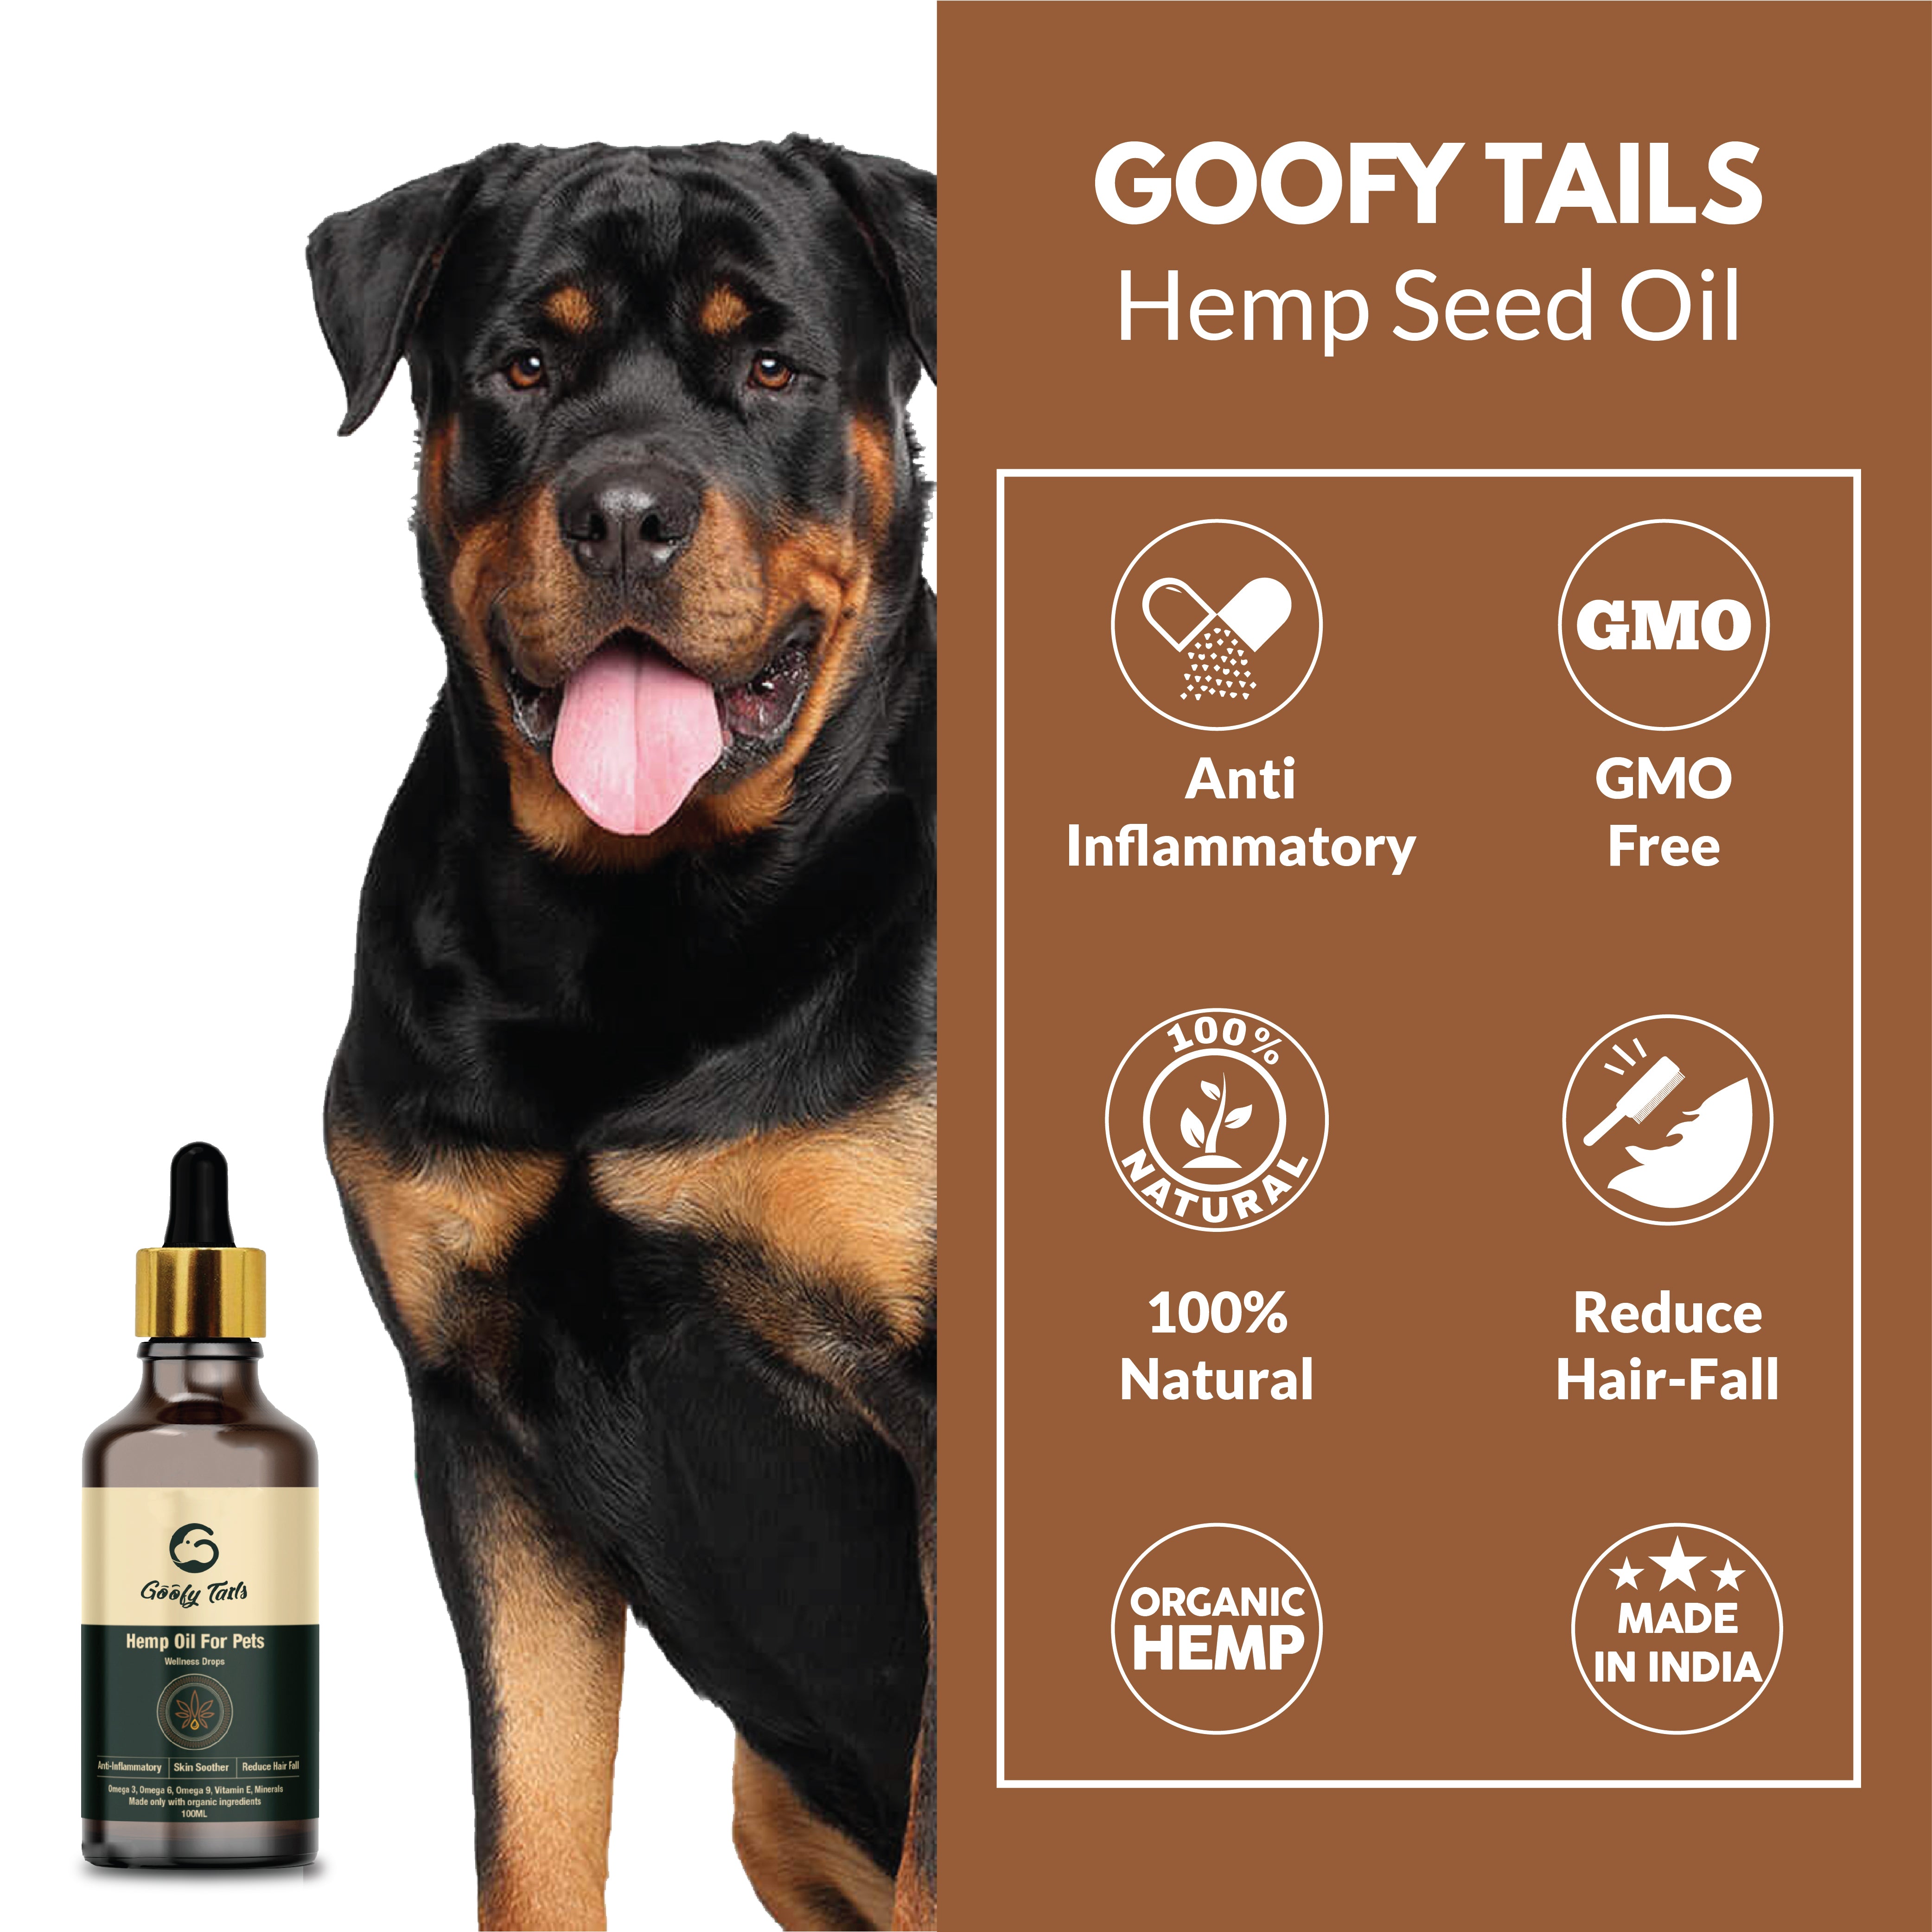 Goofy Tails Hemp seed oil with a rottweiler dog